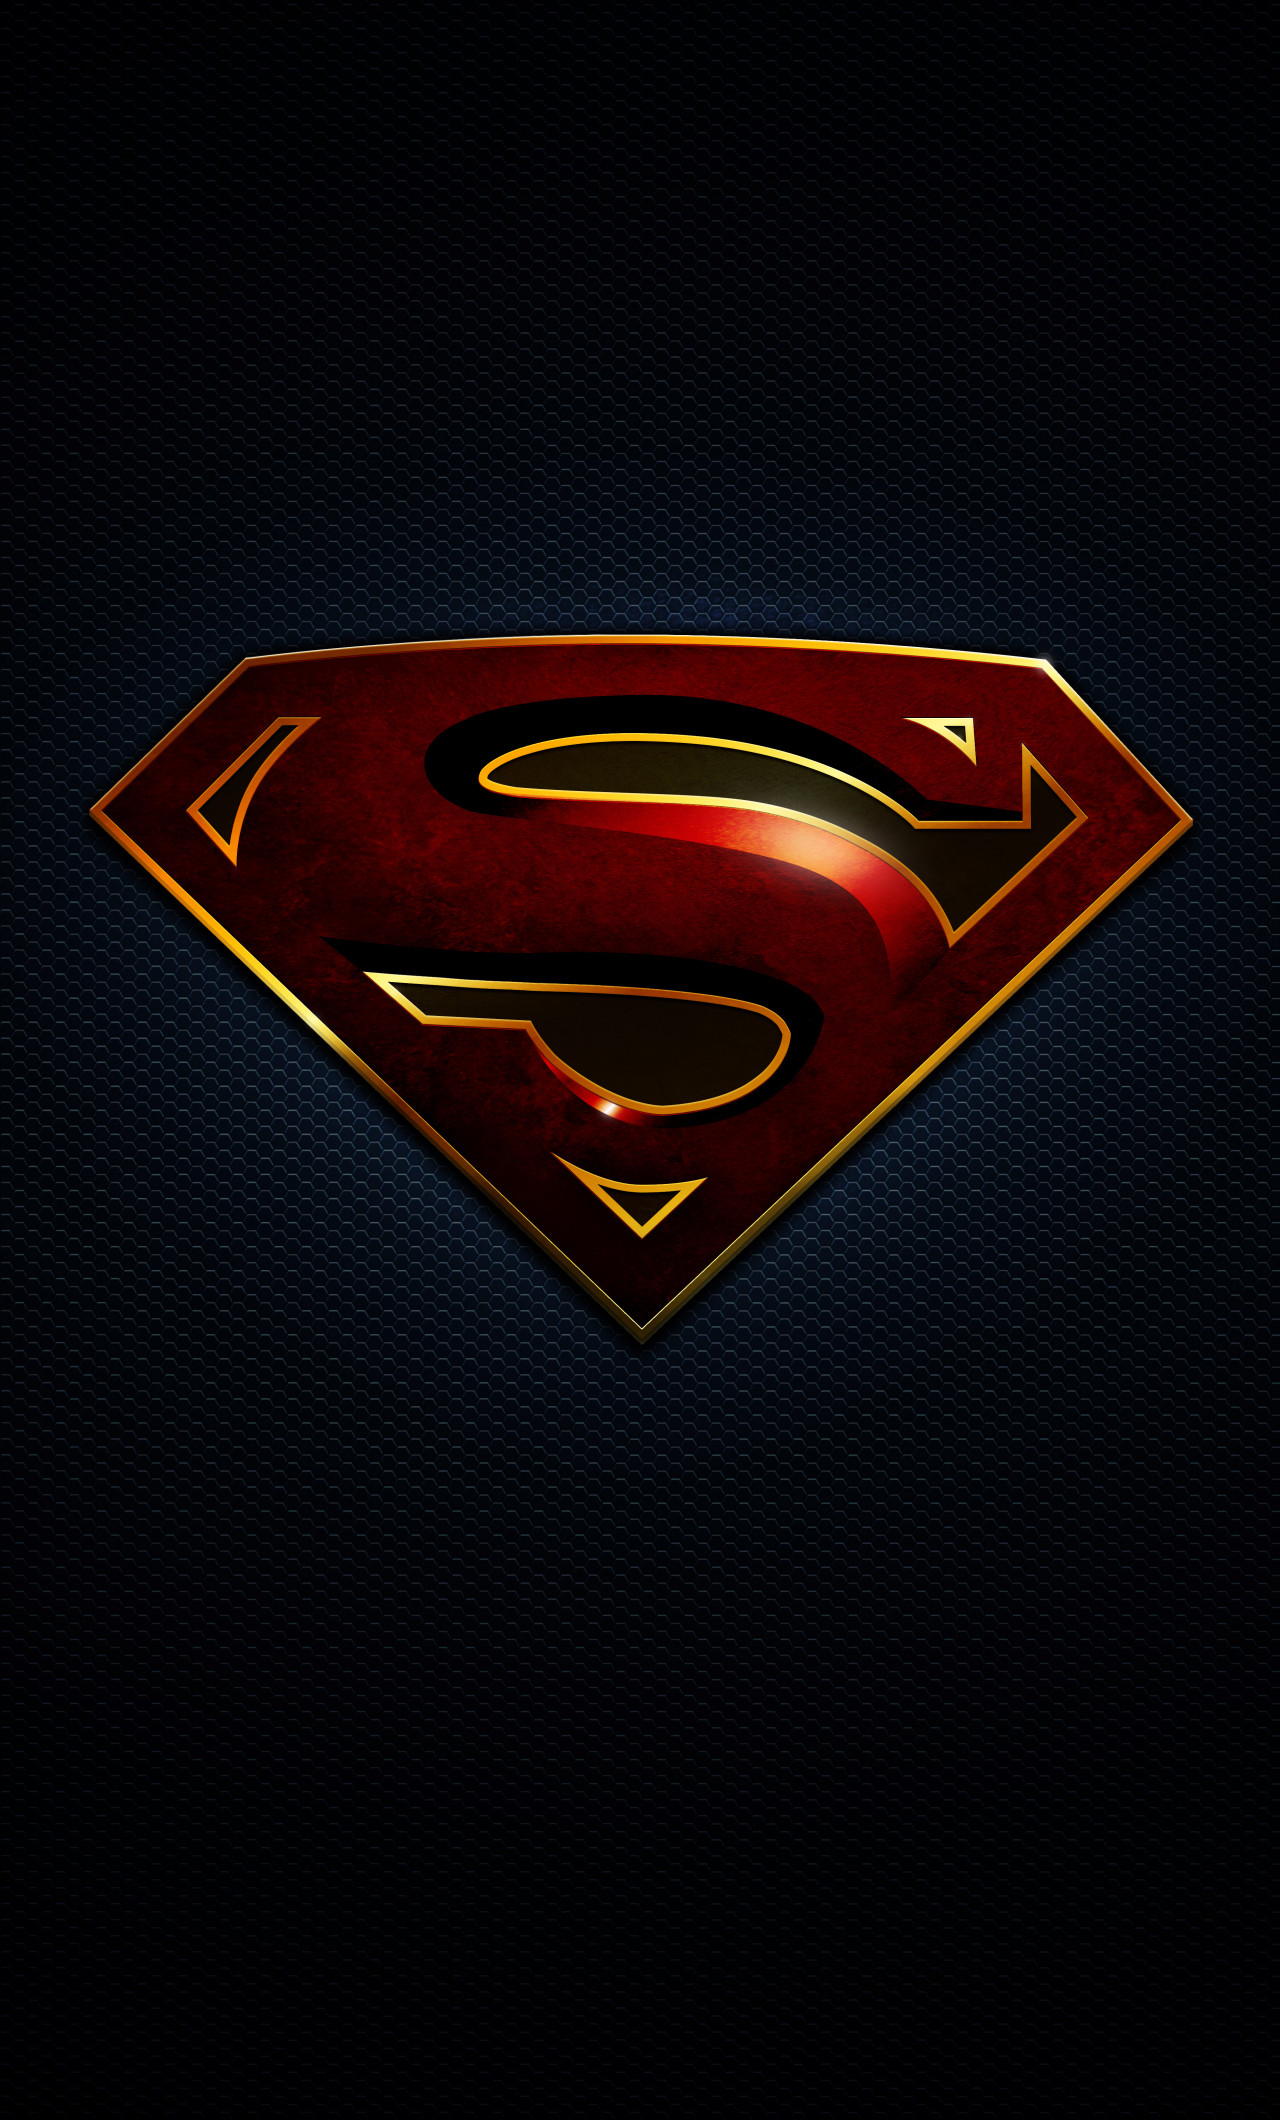 Superman Logo Wallpaper For Iphone 1280x2120 Wallpaper Teahub Io